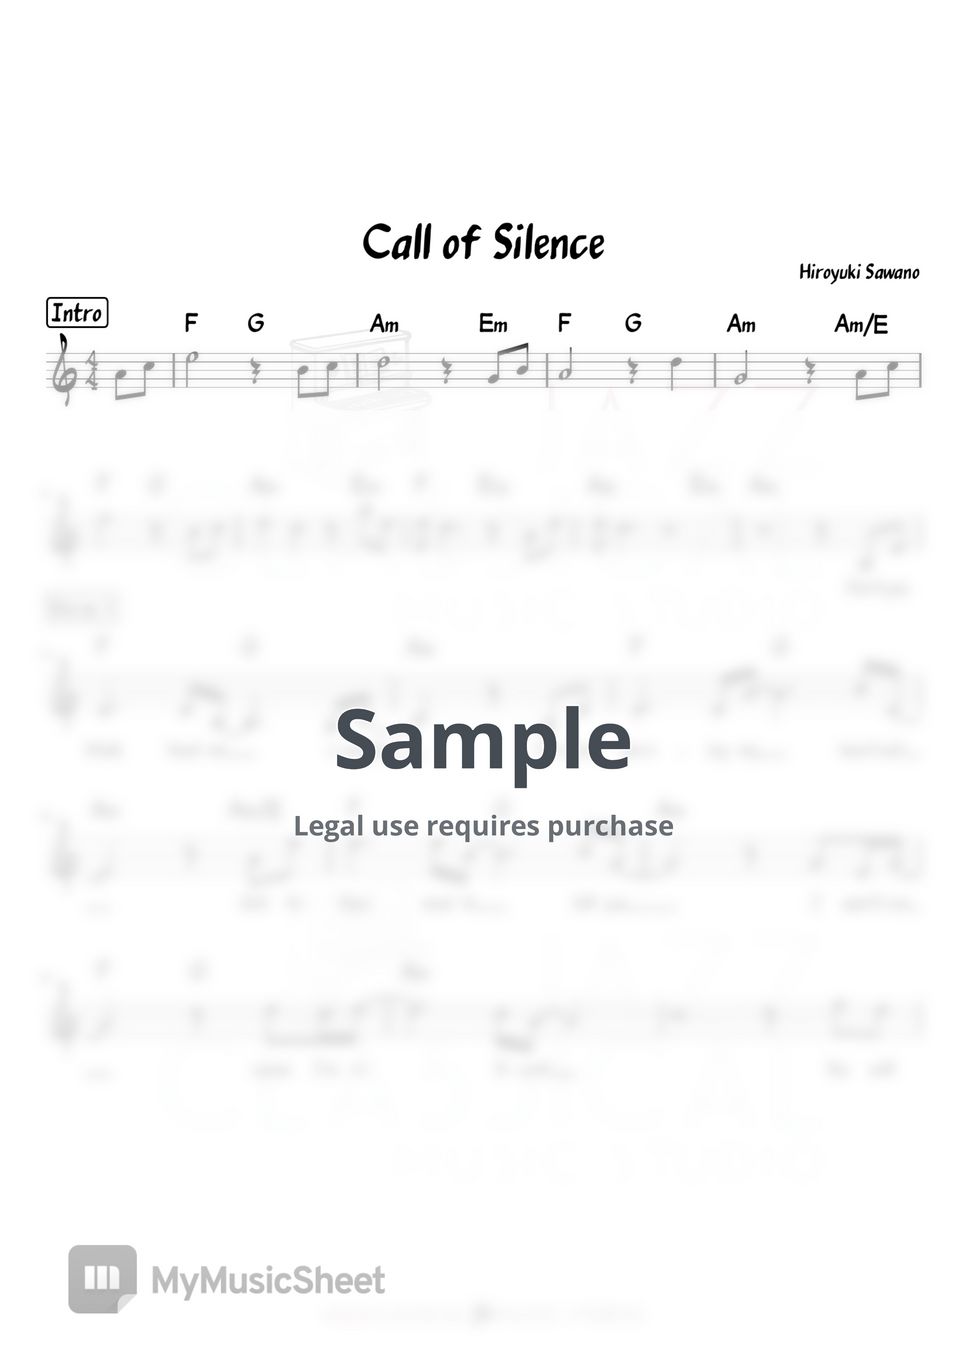 Hiroyuki Sawano - Call of Silence by Jazz Classical Music Studio